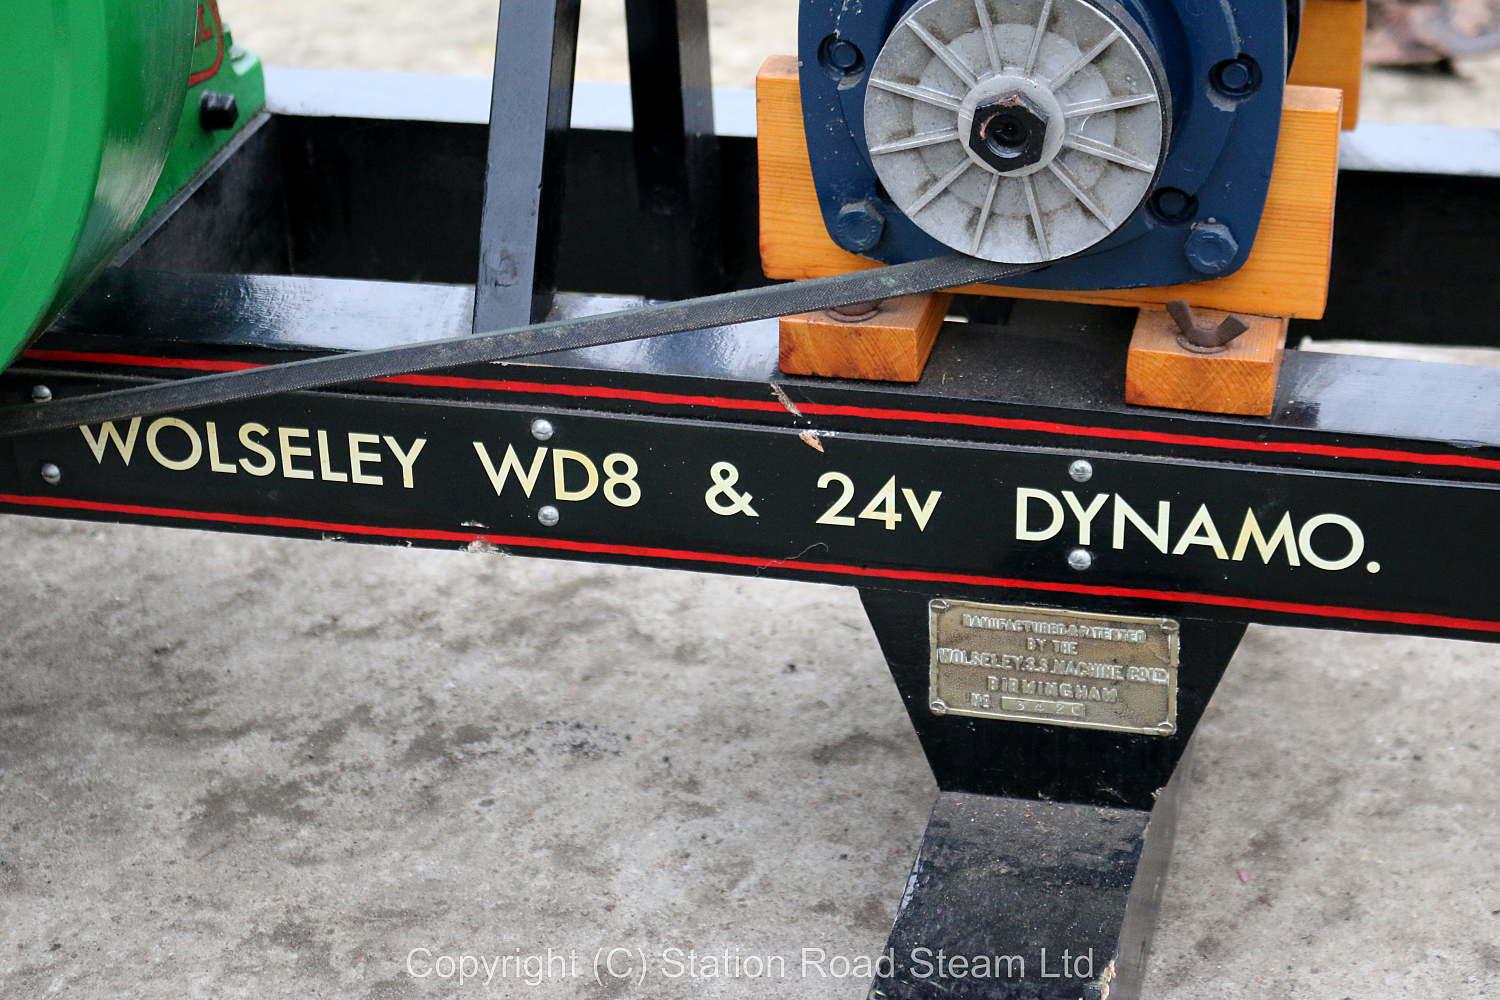 Wolseley WD8 engine with 24V dynamo & lighting board